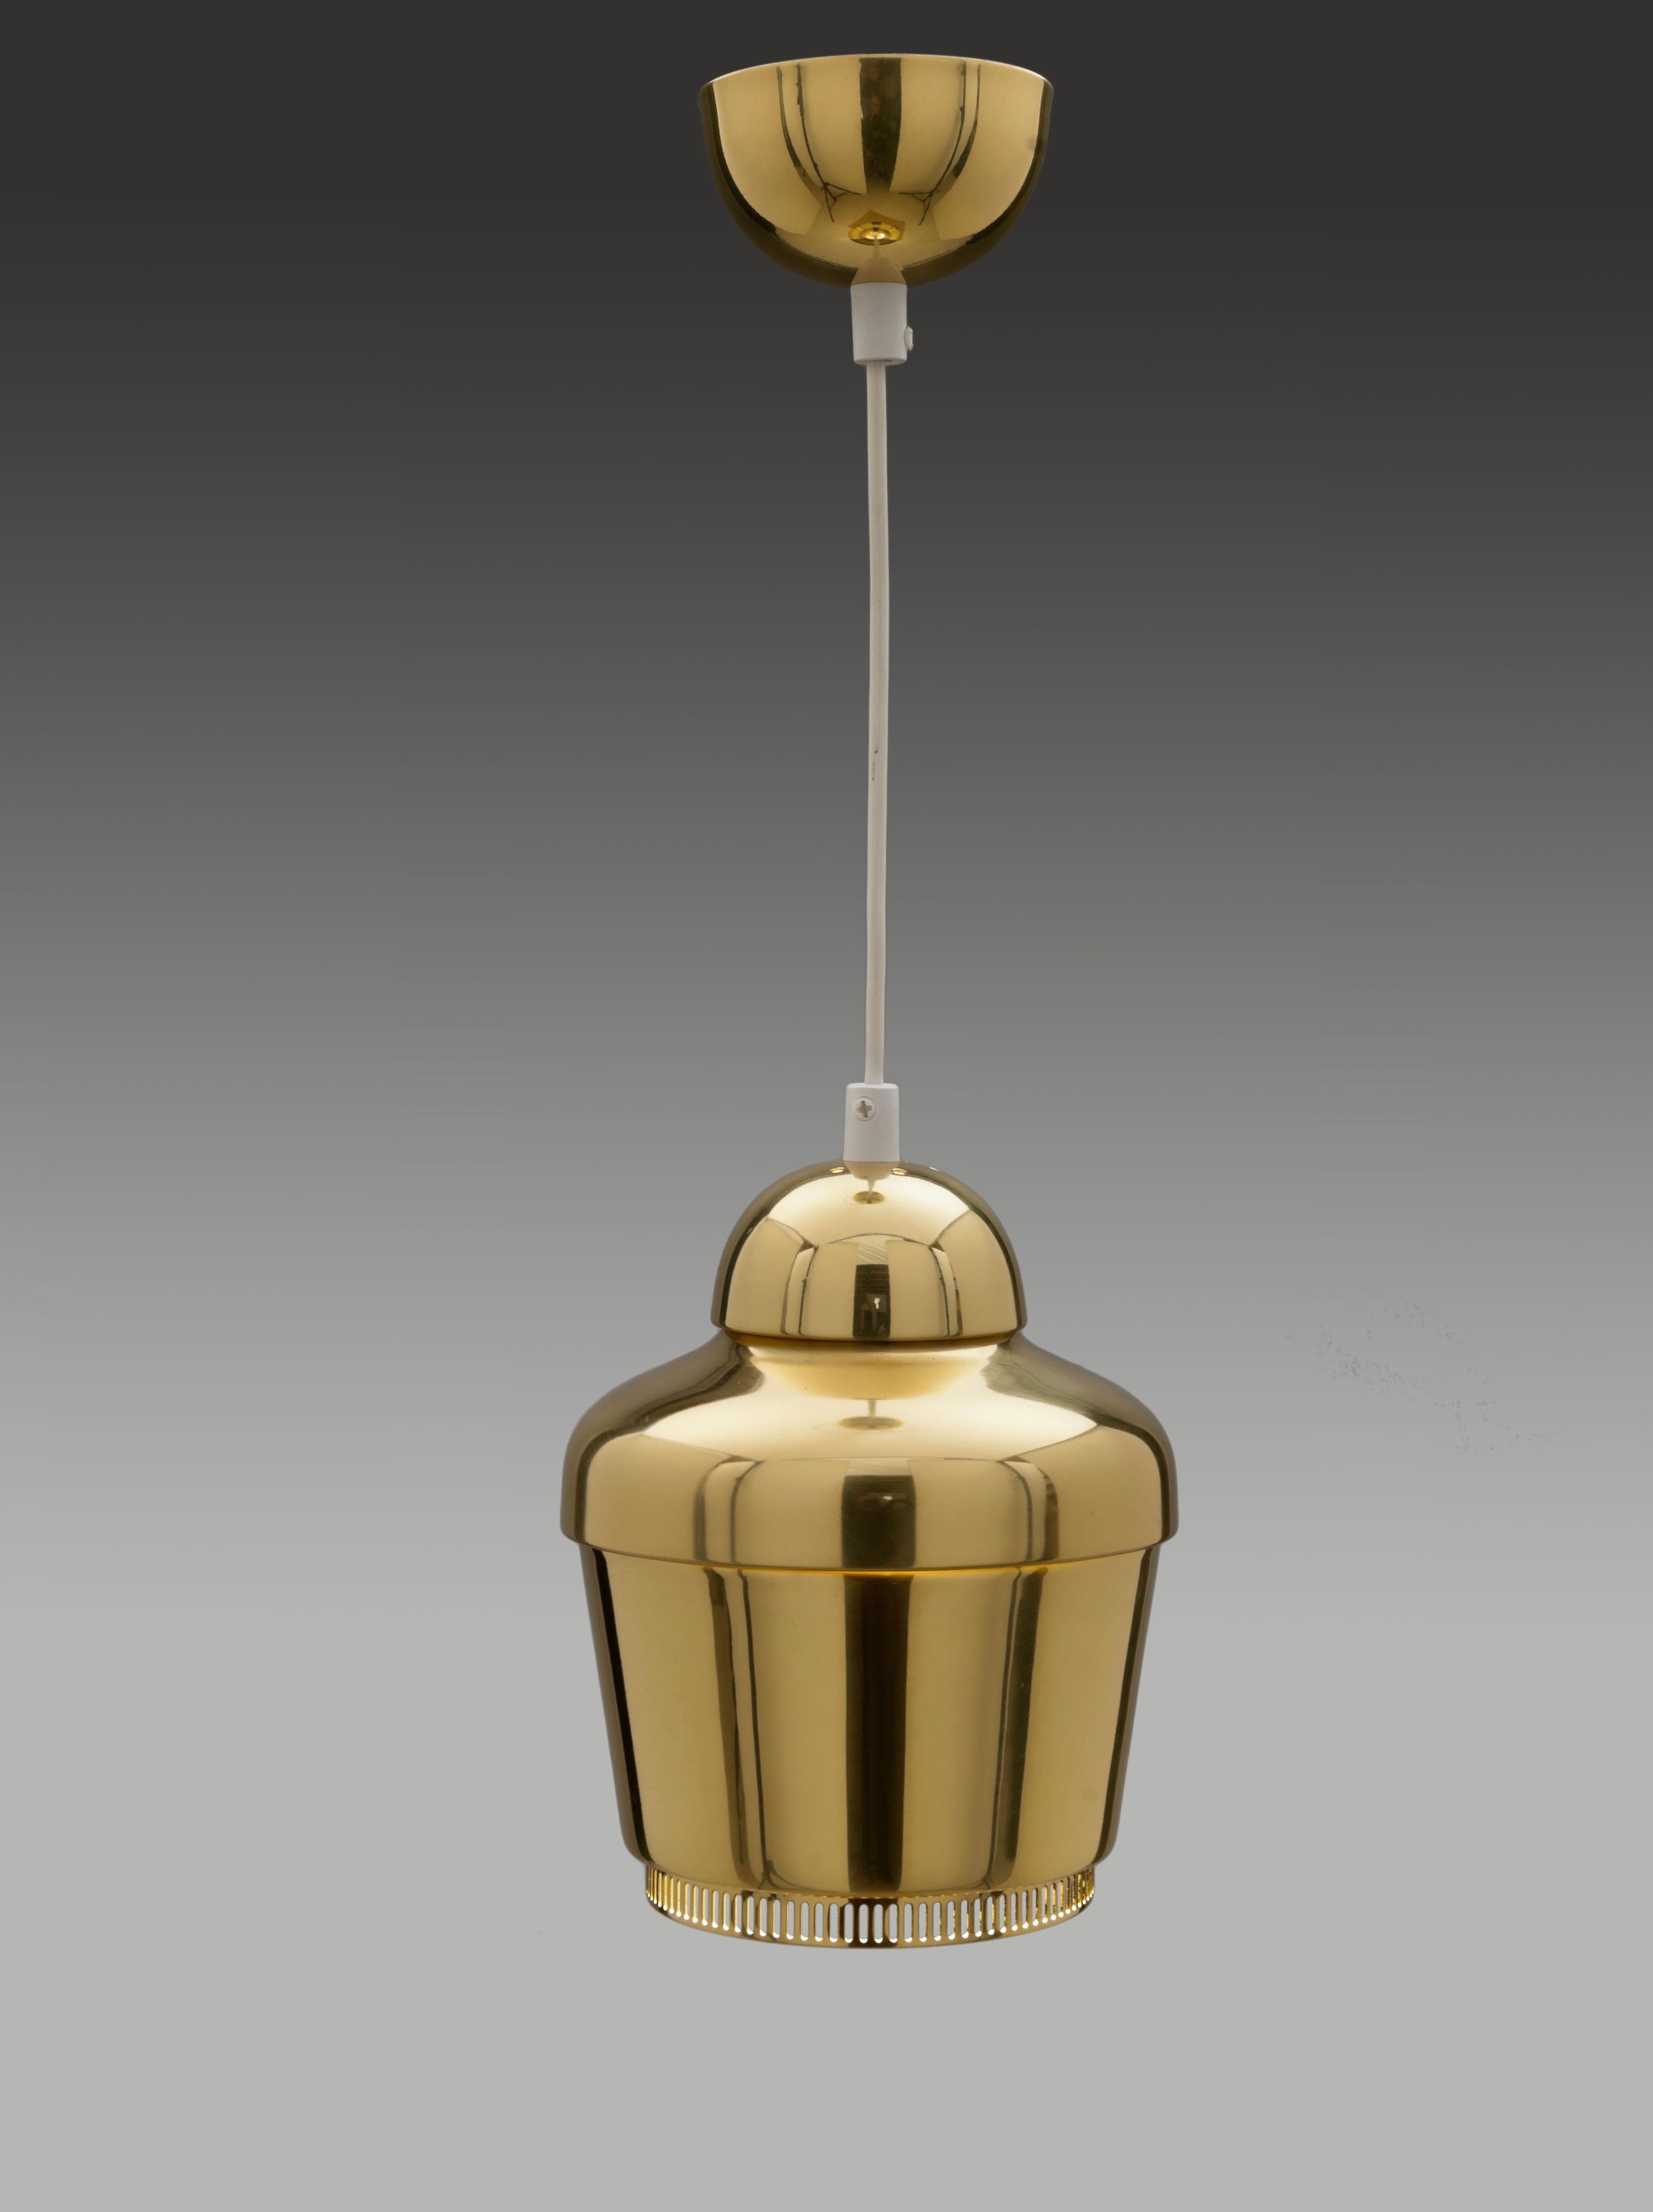 Brass 'Kultakello' Model A 330 'Golden Bell' Pendant by Alvar Aalto, Finland 4